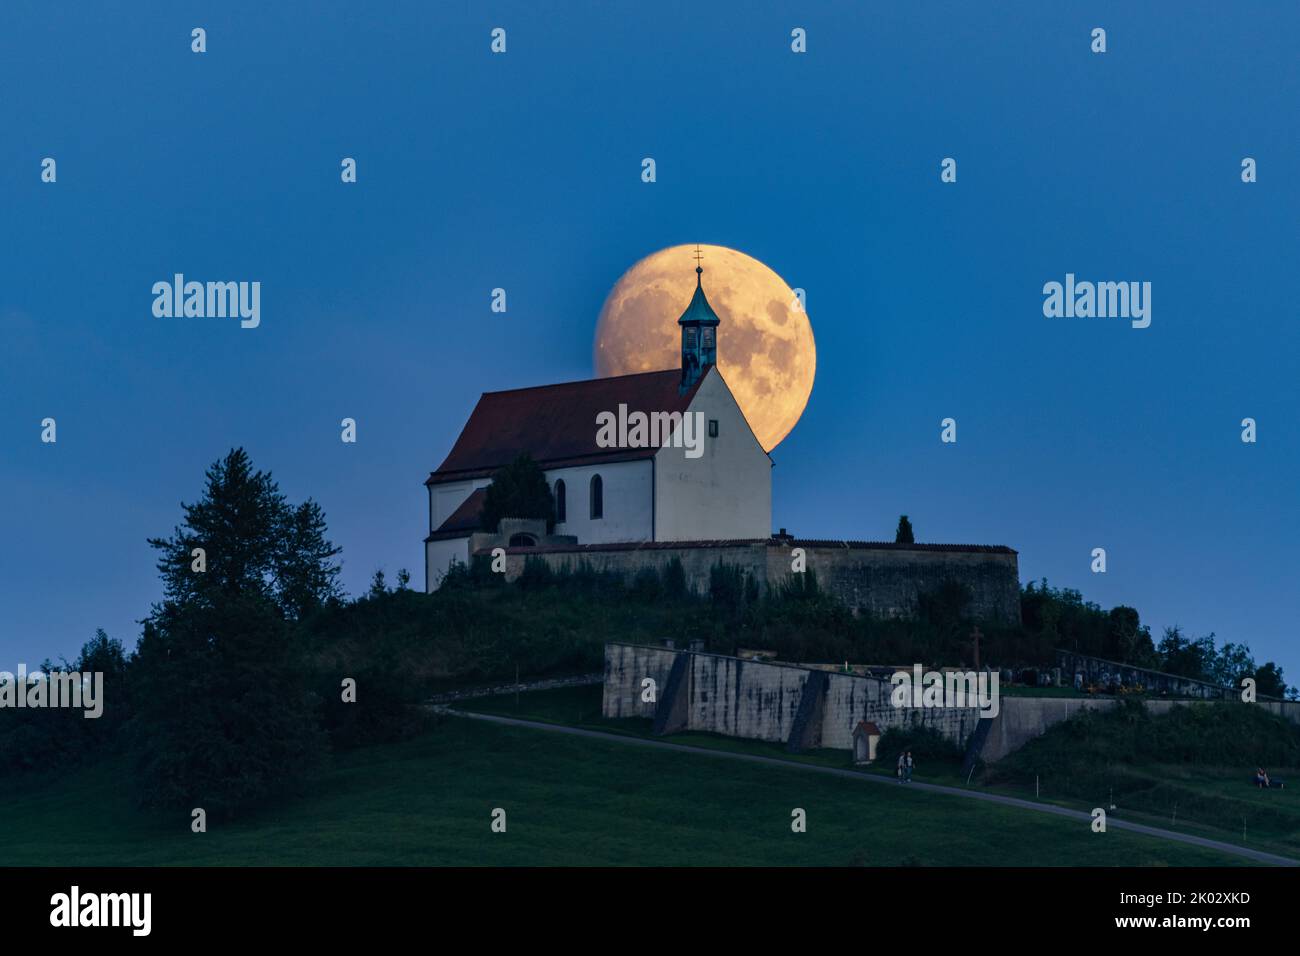 Full moon, Wurmlinger Chapel, Rottenburg, Germany Stock Photo